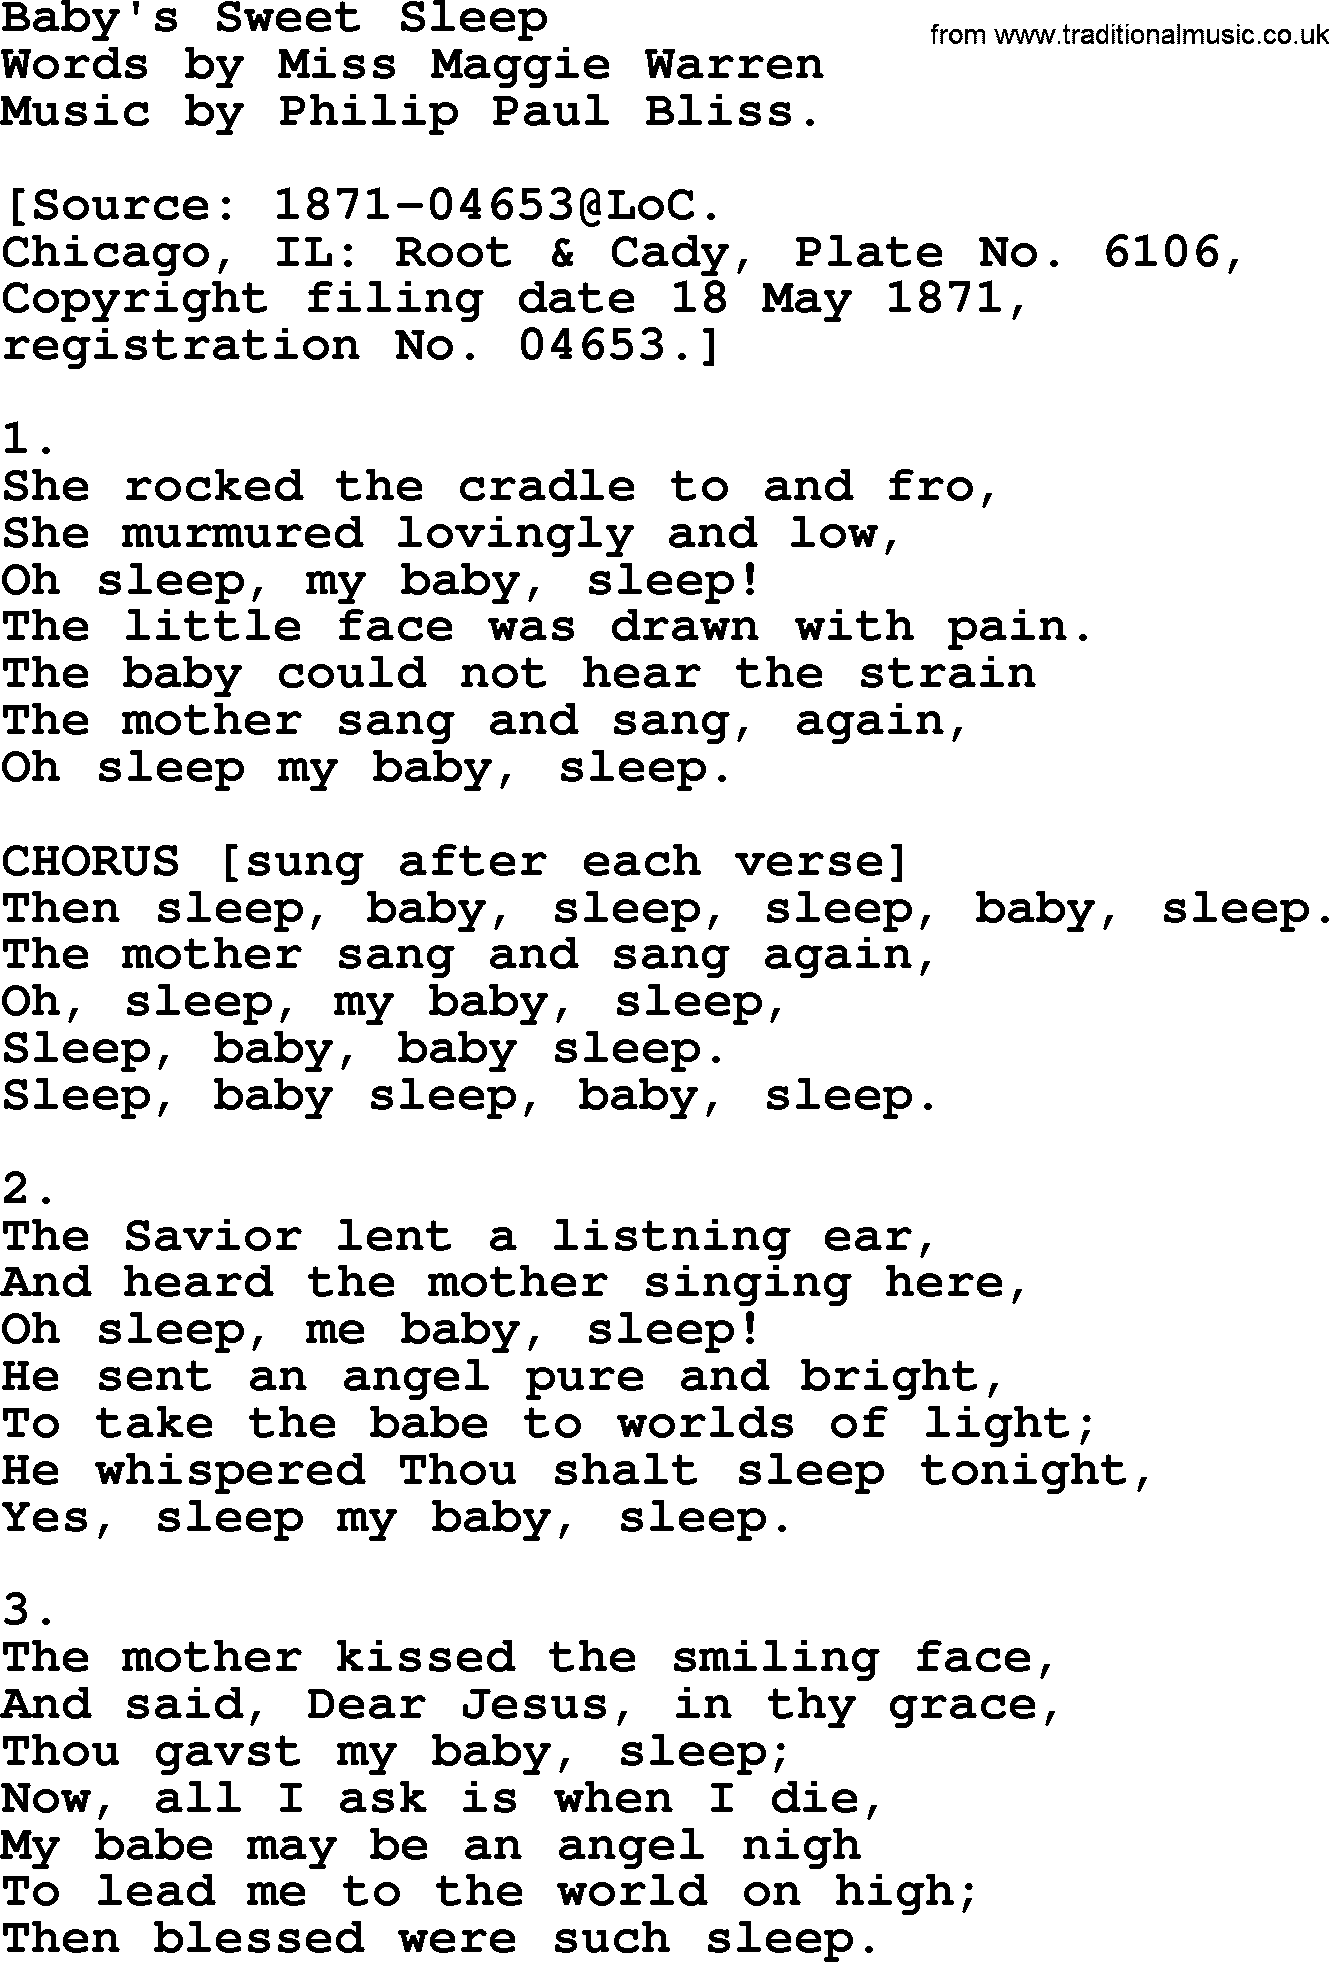 Philip Bliss Song: Baby's Sweet Sleep, lyrics